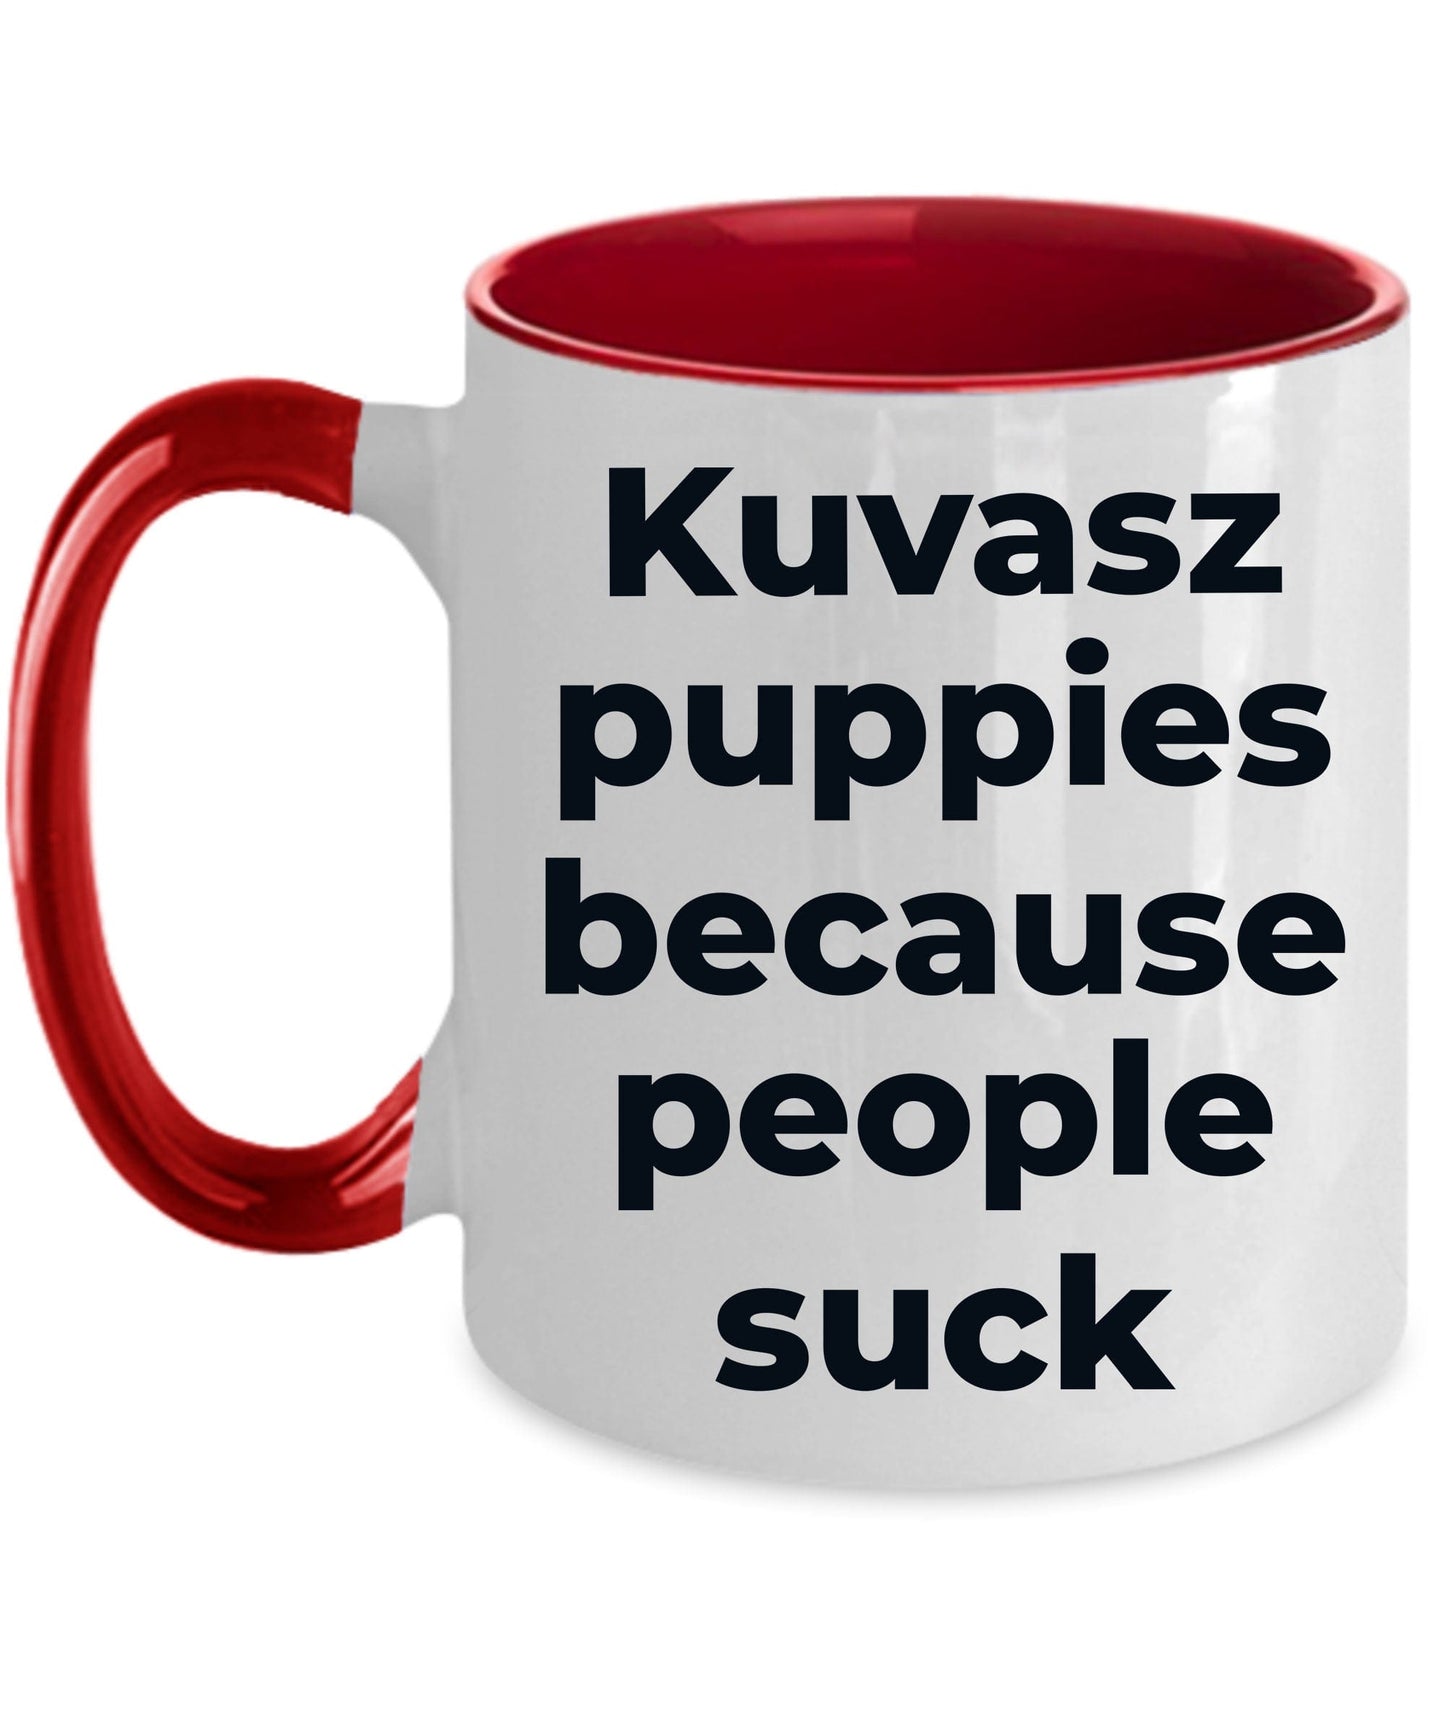 Kuvasz funny dog mug - Kuvasz puppies because people suck white and color two tone